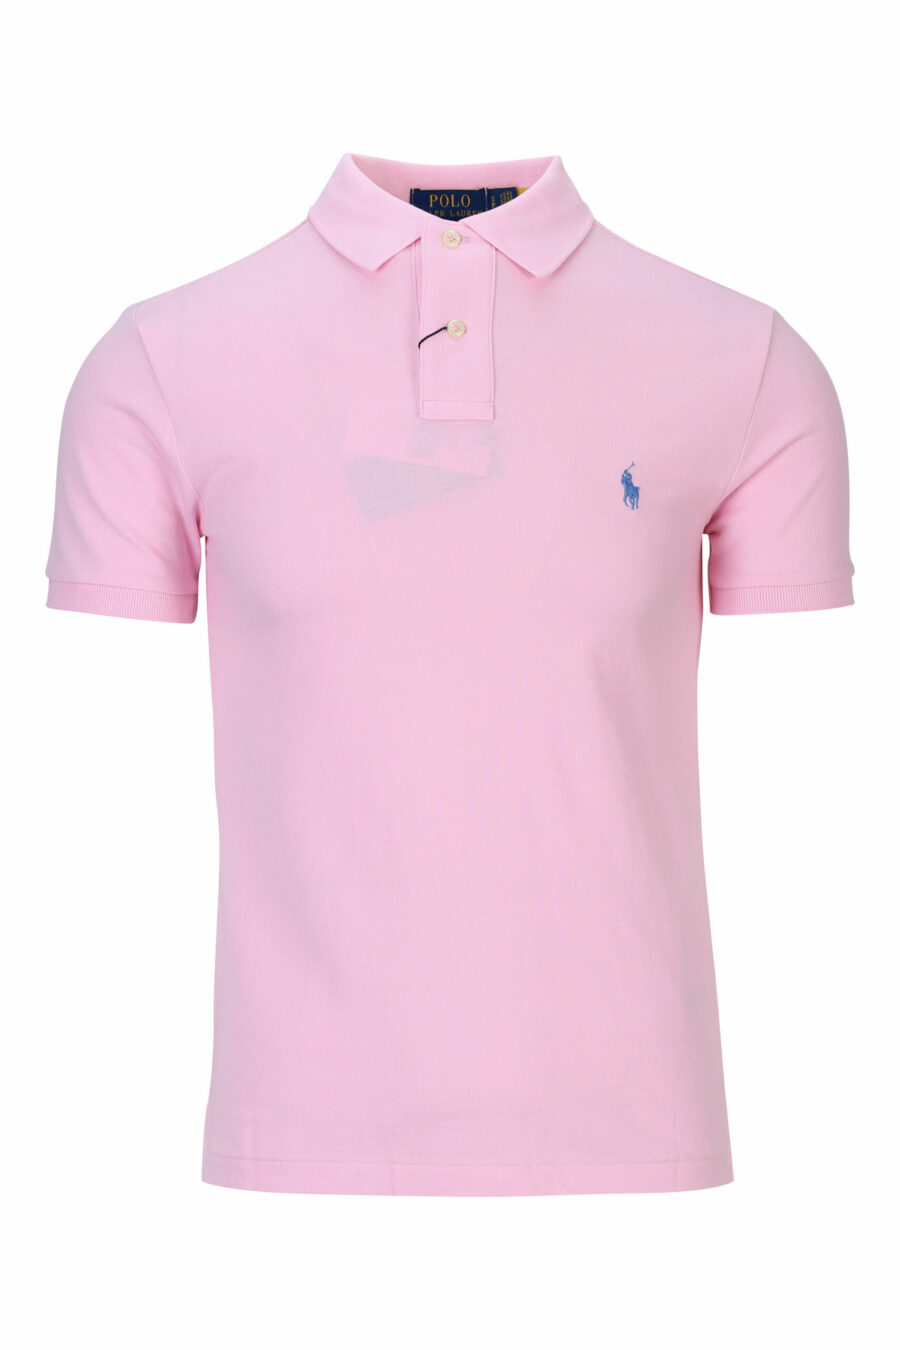 Pink polo shirt with mini-logo "polo" - 3615739771649 scaled